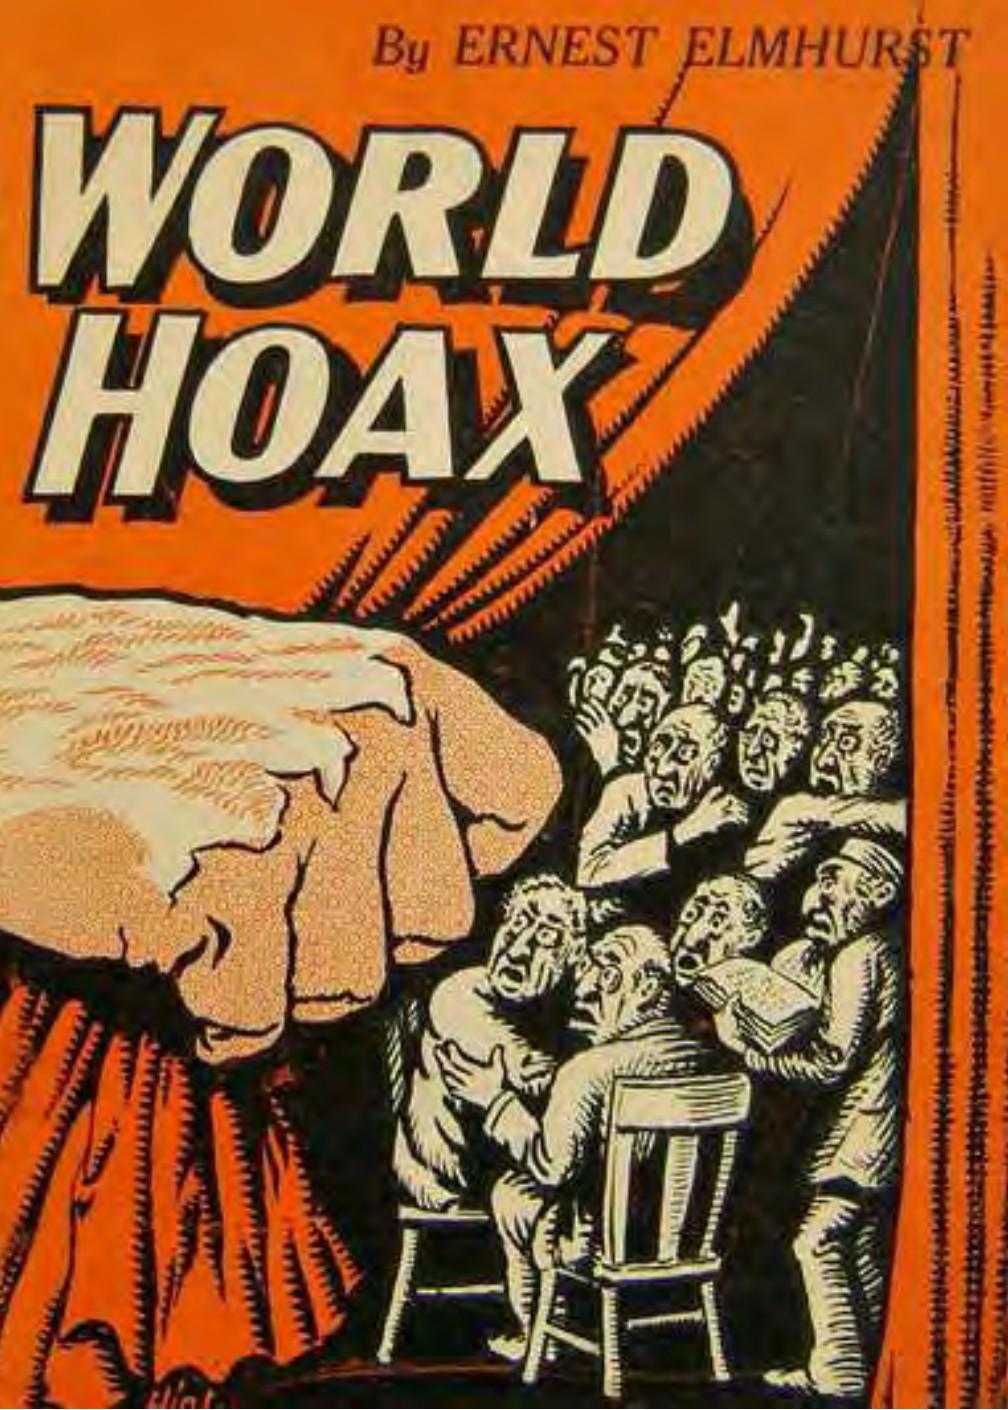 The World Hoax (1938) by Ernest F. Elmhurst